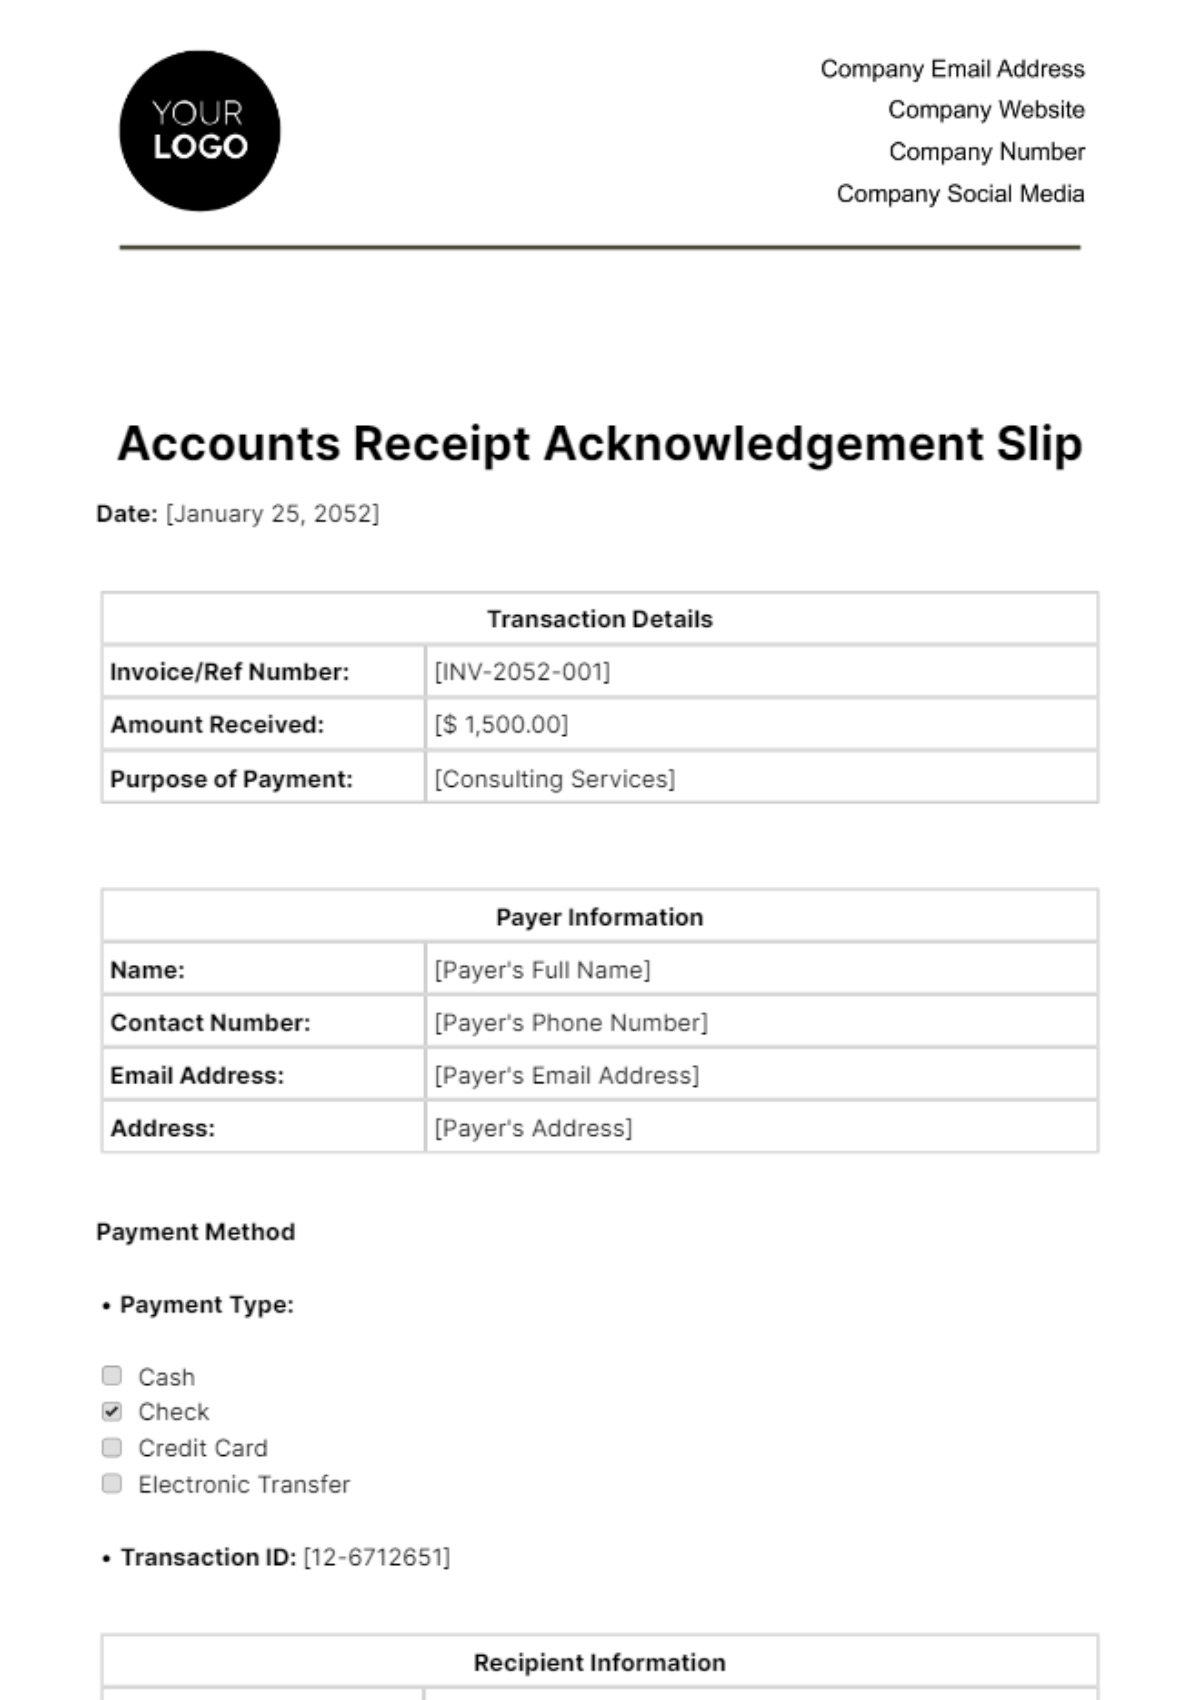 Accounts Receipt Acknowledgement Slip Template